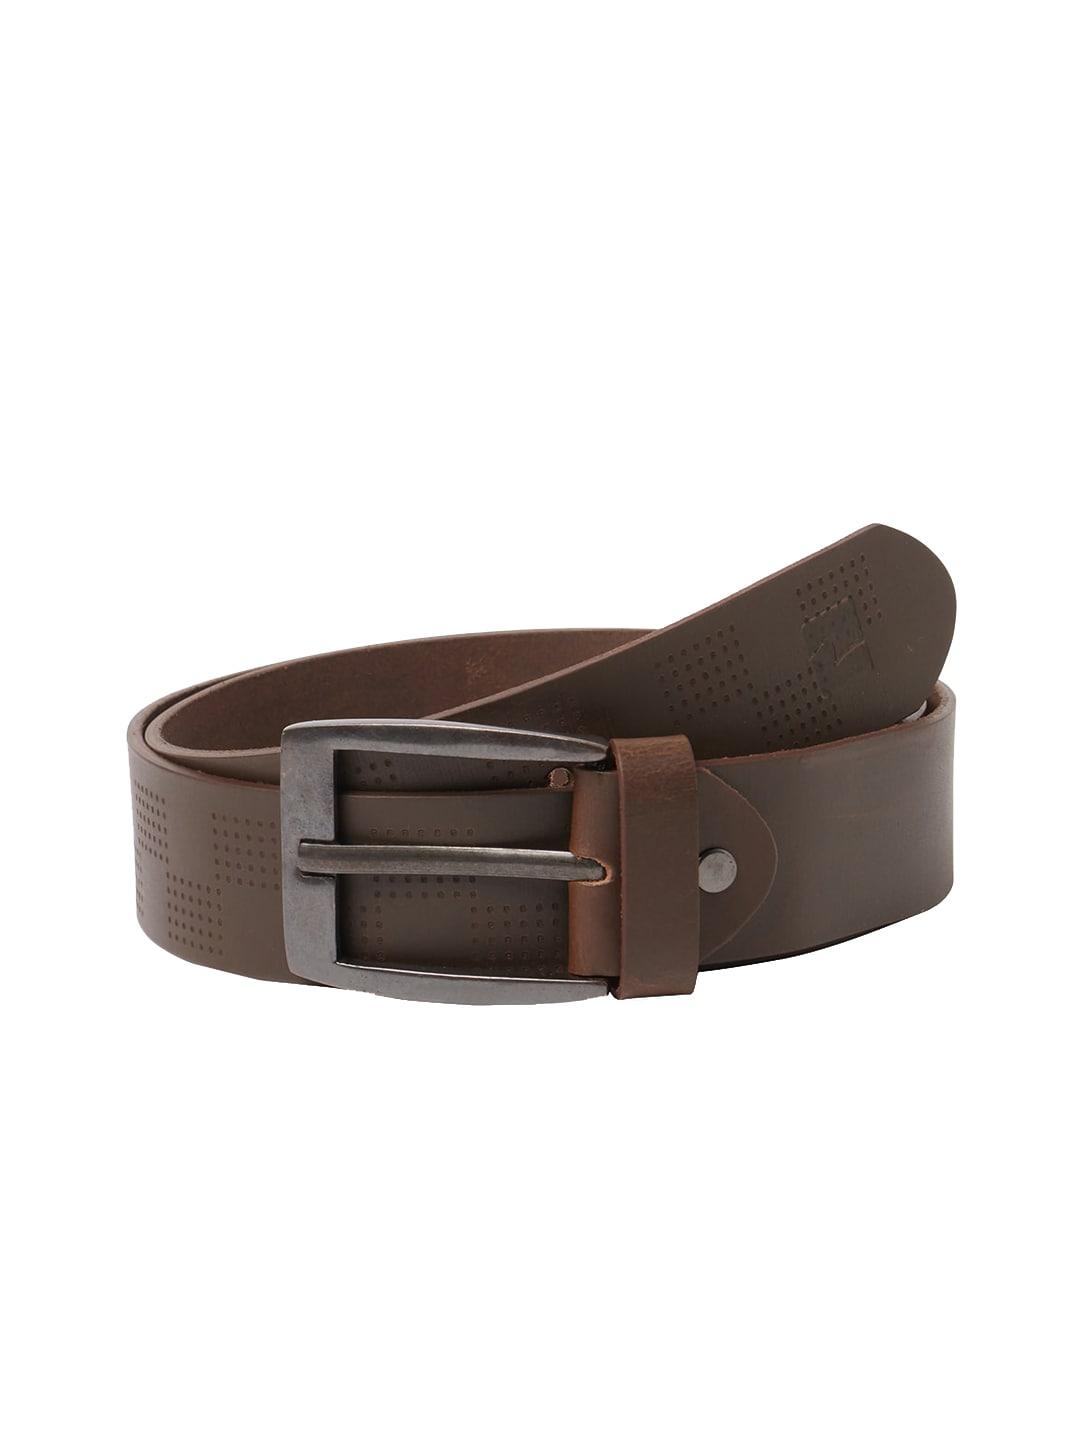 spykar-men-brown-leather-belt